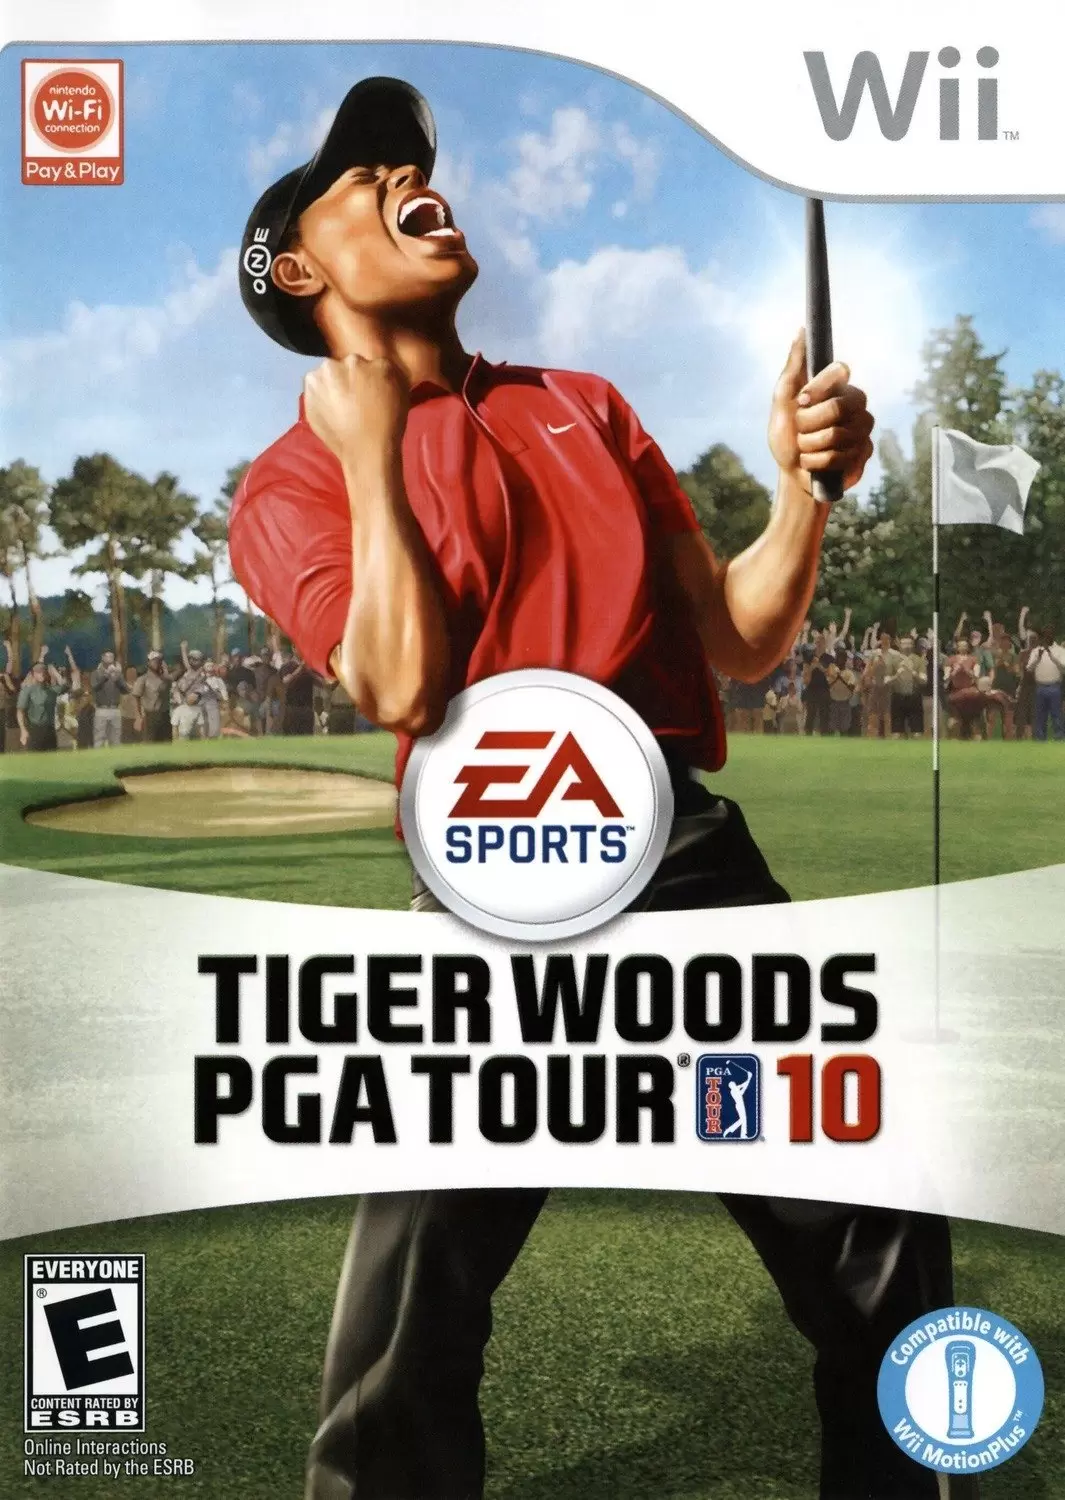 Nintendo Wii Games - Tiger Woods PGA Tour 10